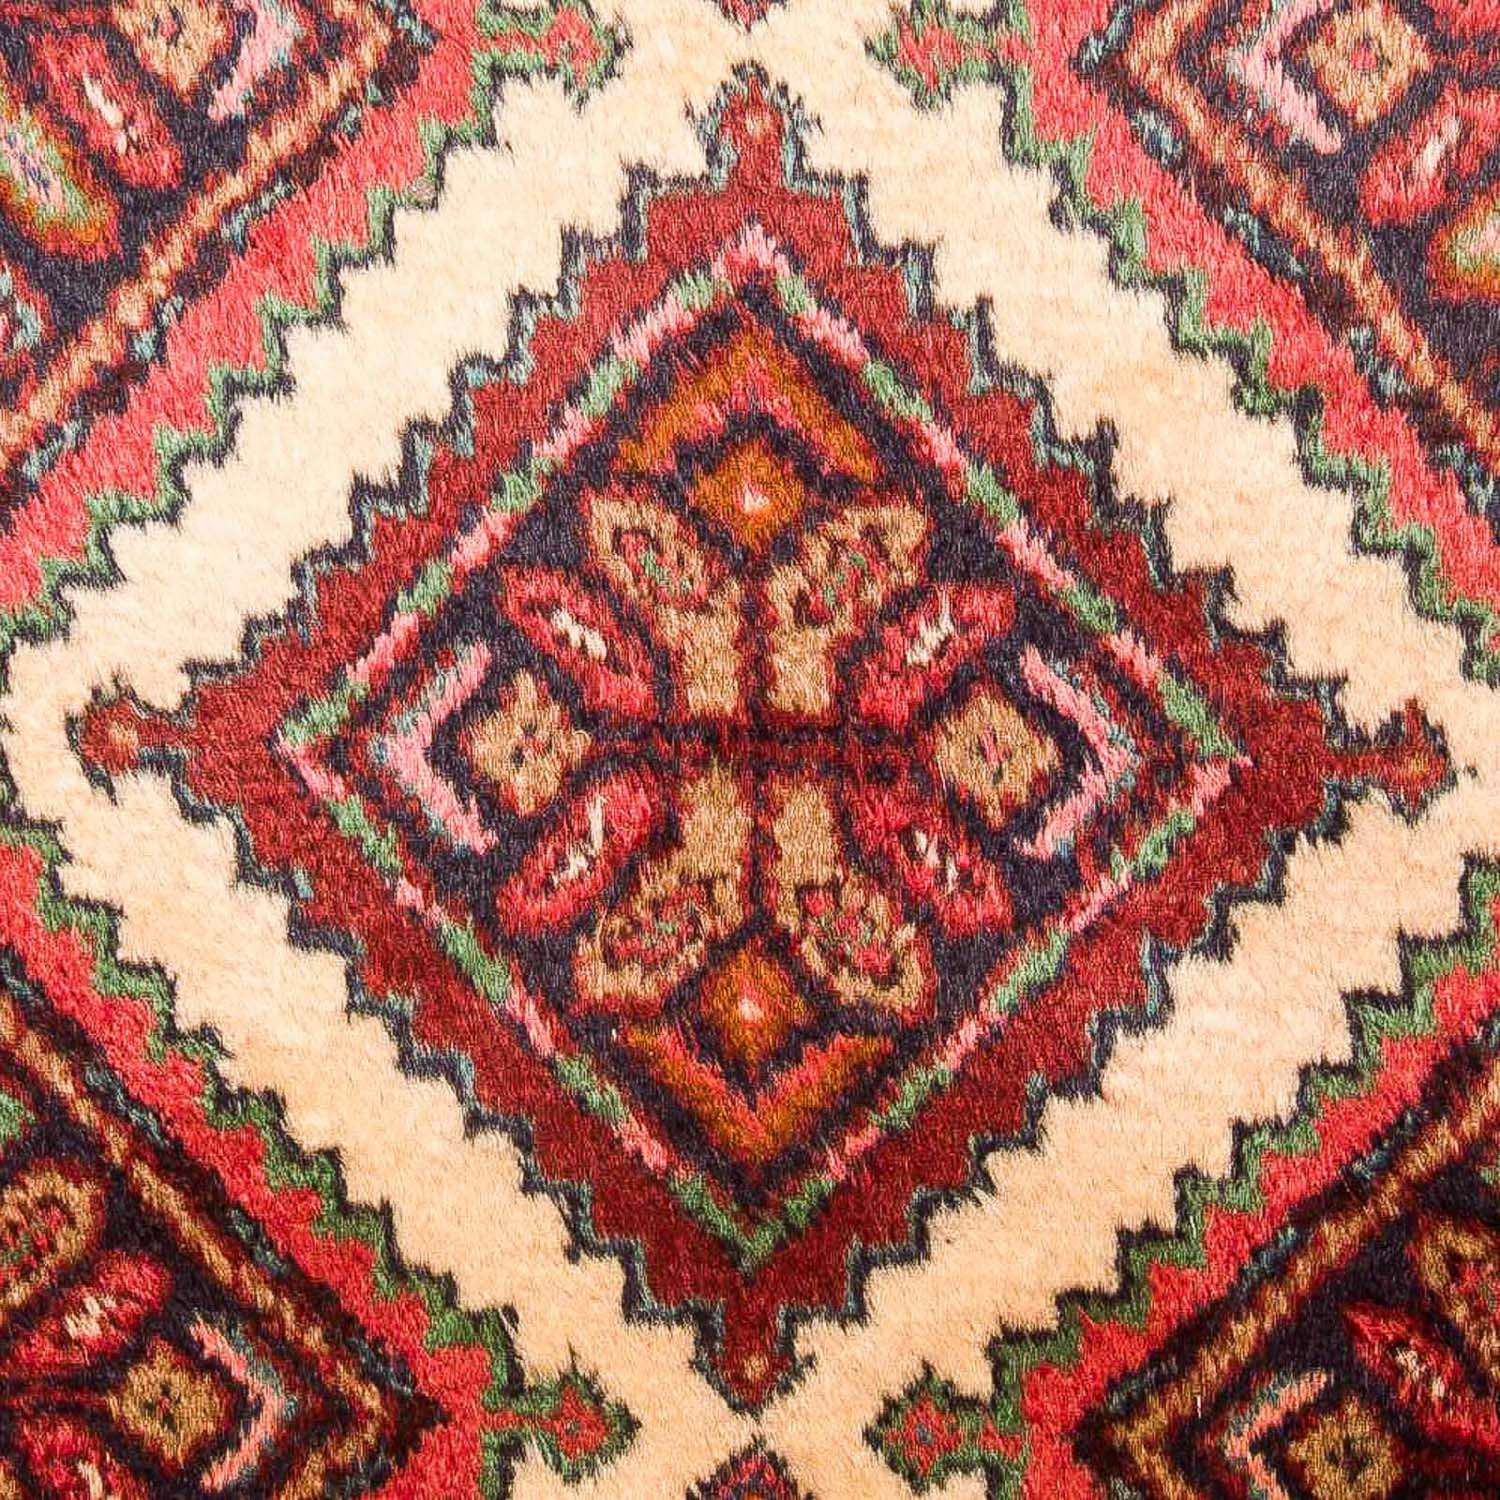 Runner Perský koberec - Nomádský - 325 x 78 cm - hnědá